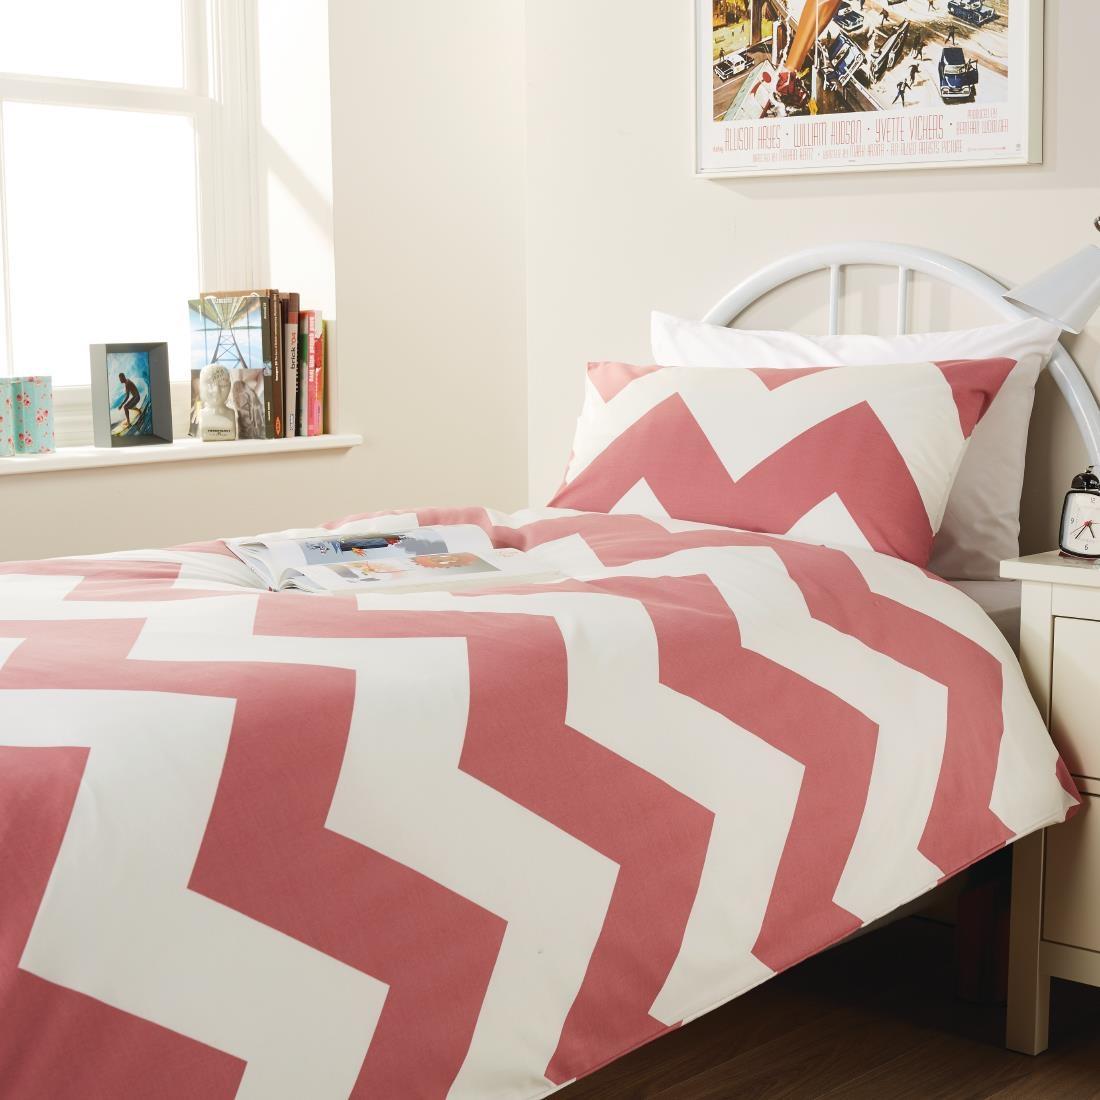 Mitre Comfort New York Double Bedding Set Pink - HB520  - 1